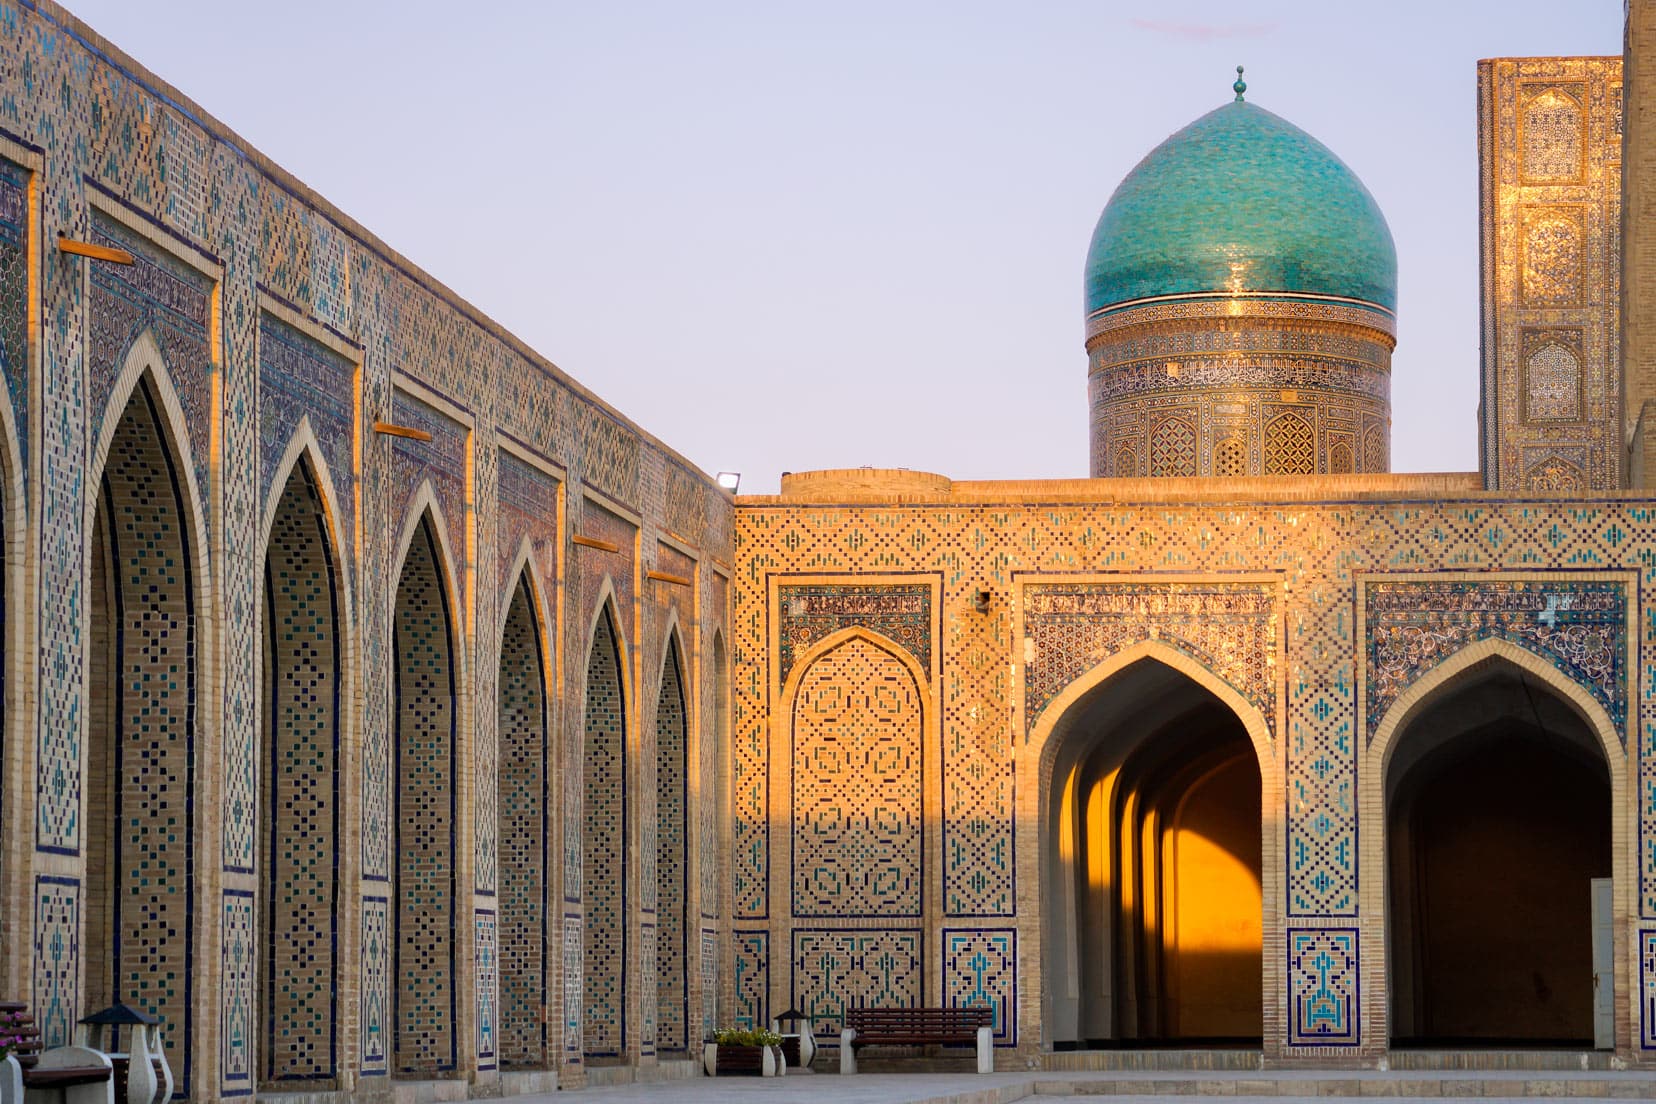 Bukhara-madrasah viewed with sun set rays
,-Uzbekistan